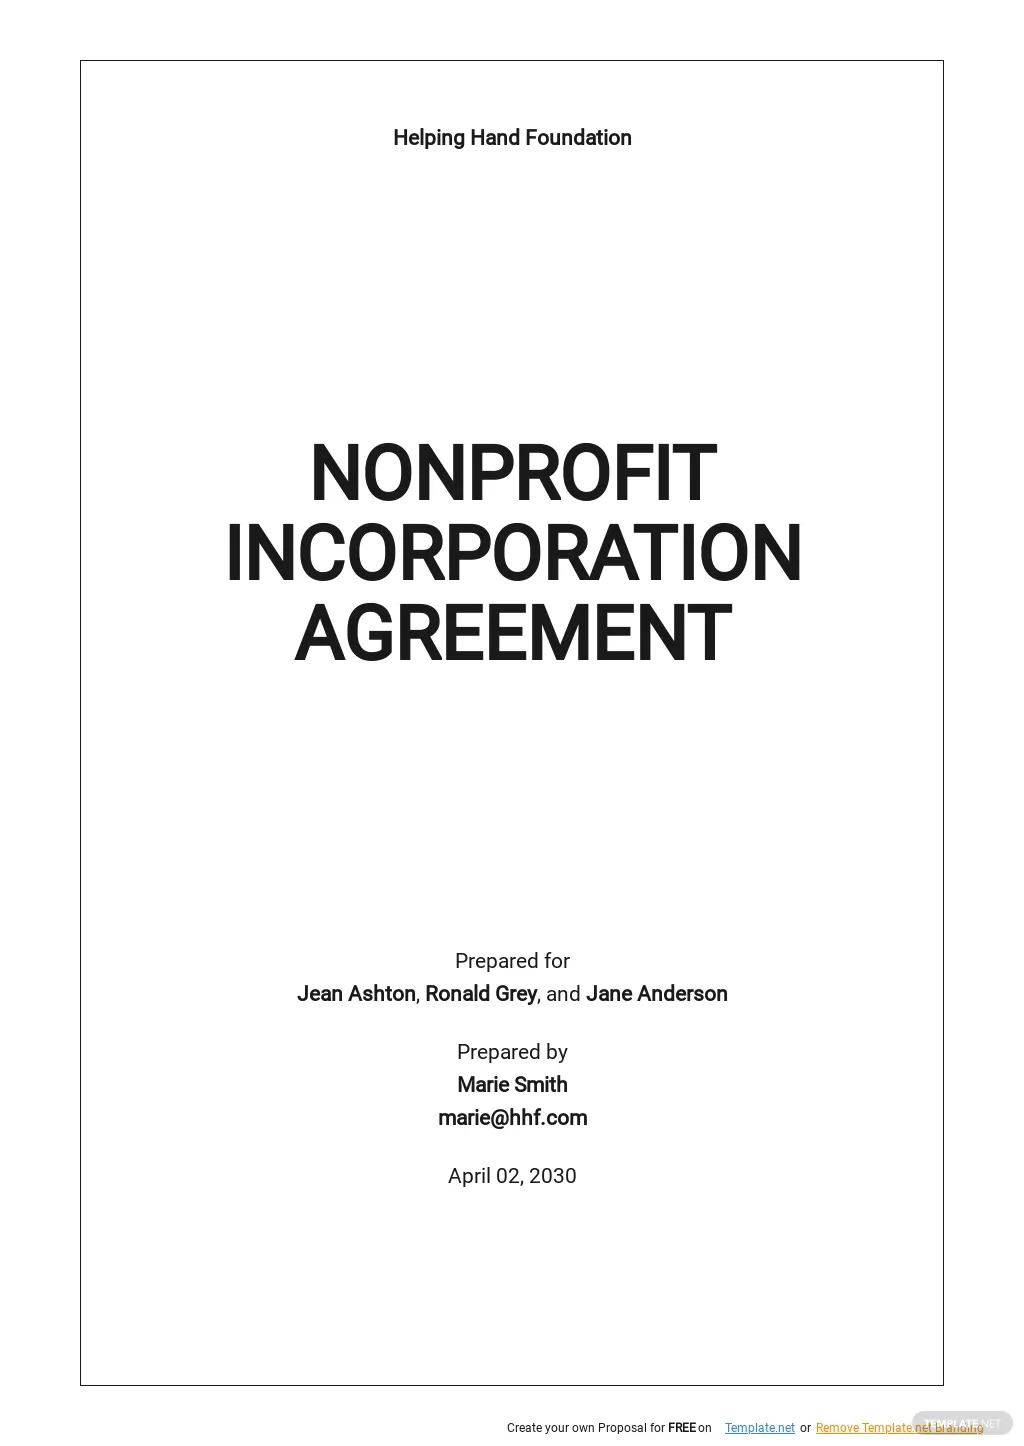 organization incorporation agreement